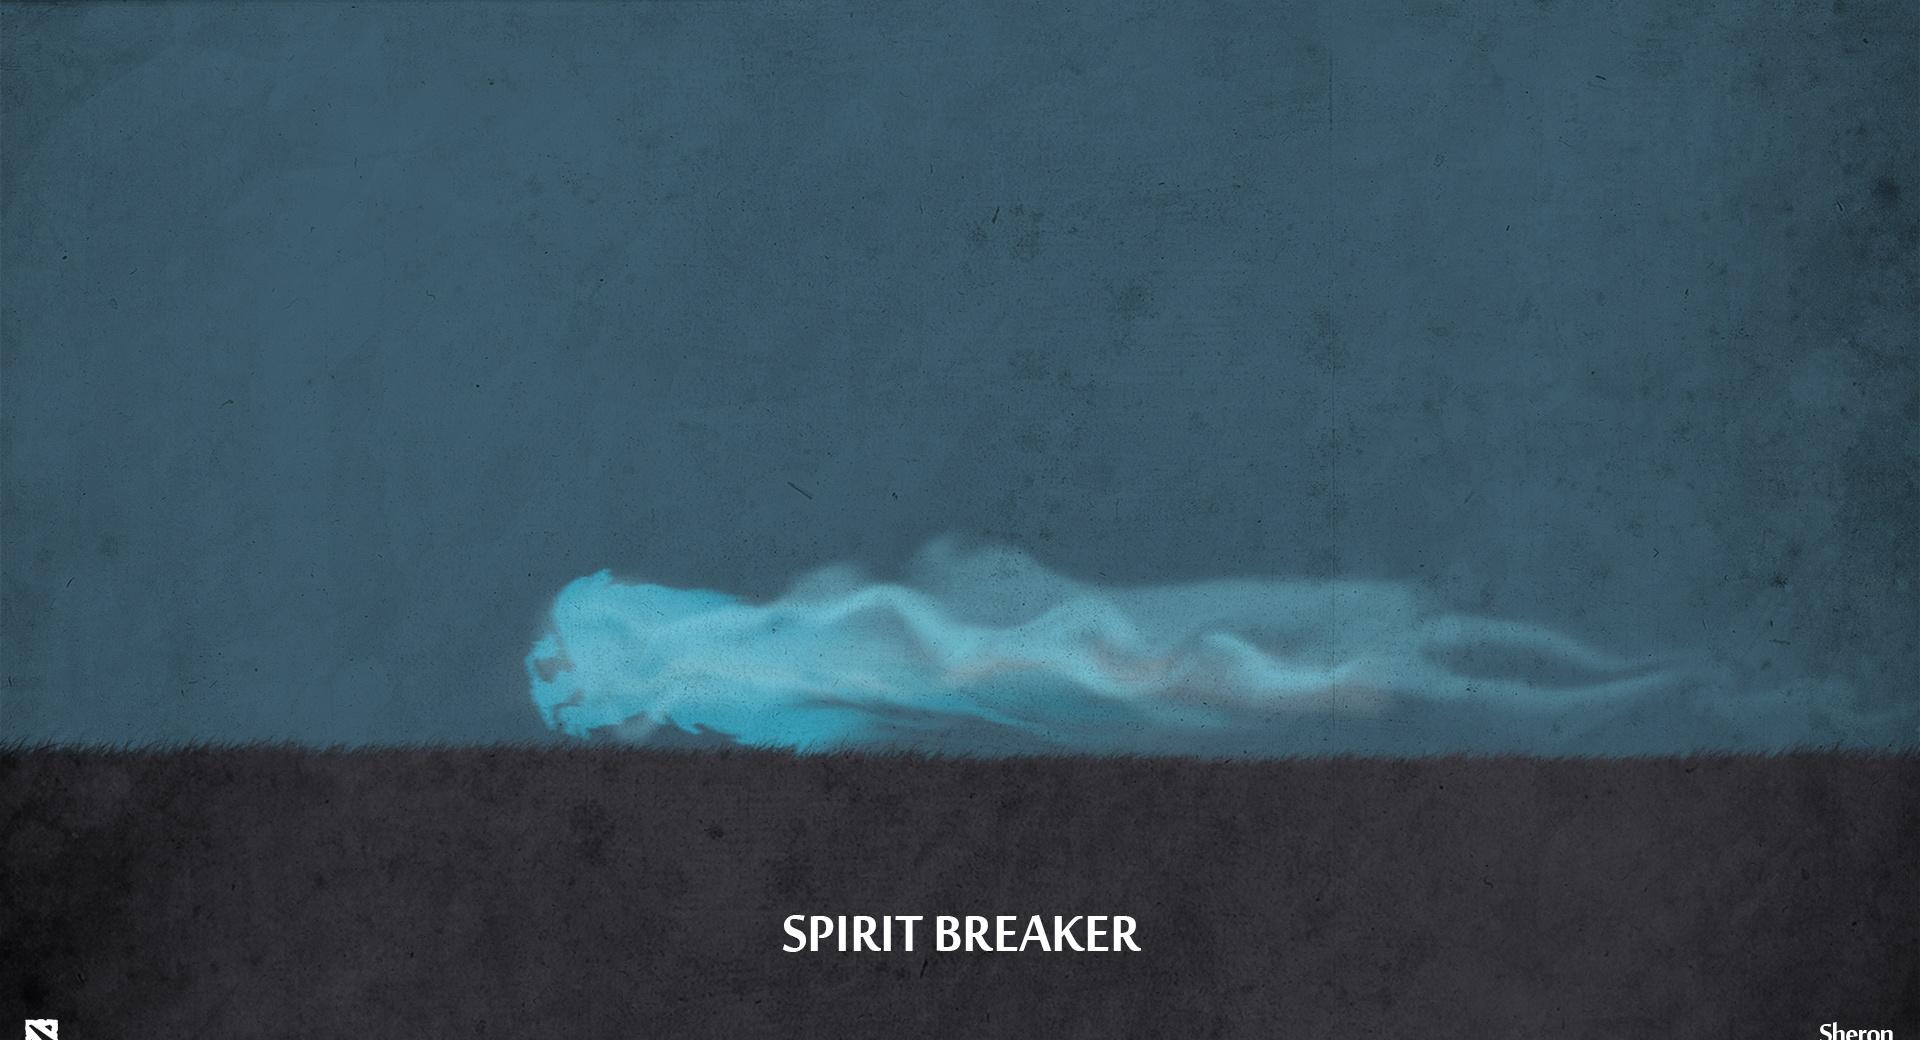 Spirit Breaker - DotA 2 at 1152 x 864 size wallpapers HD quality